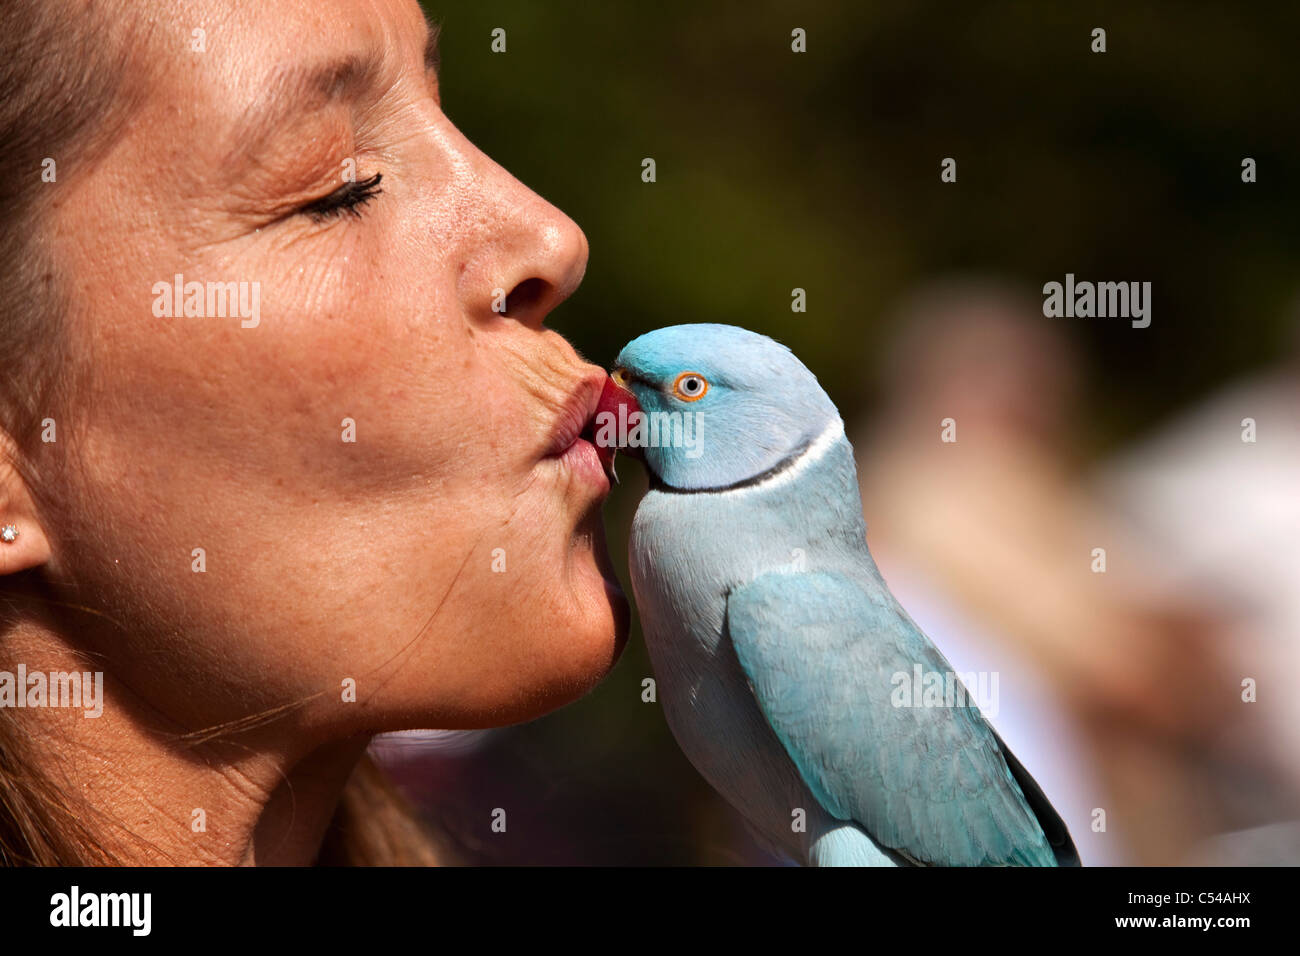 The Netherlands, Amsterdam, Woman kissing parakeet. Stock Photo